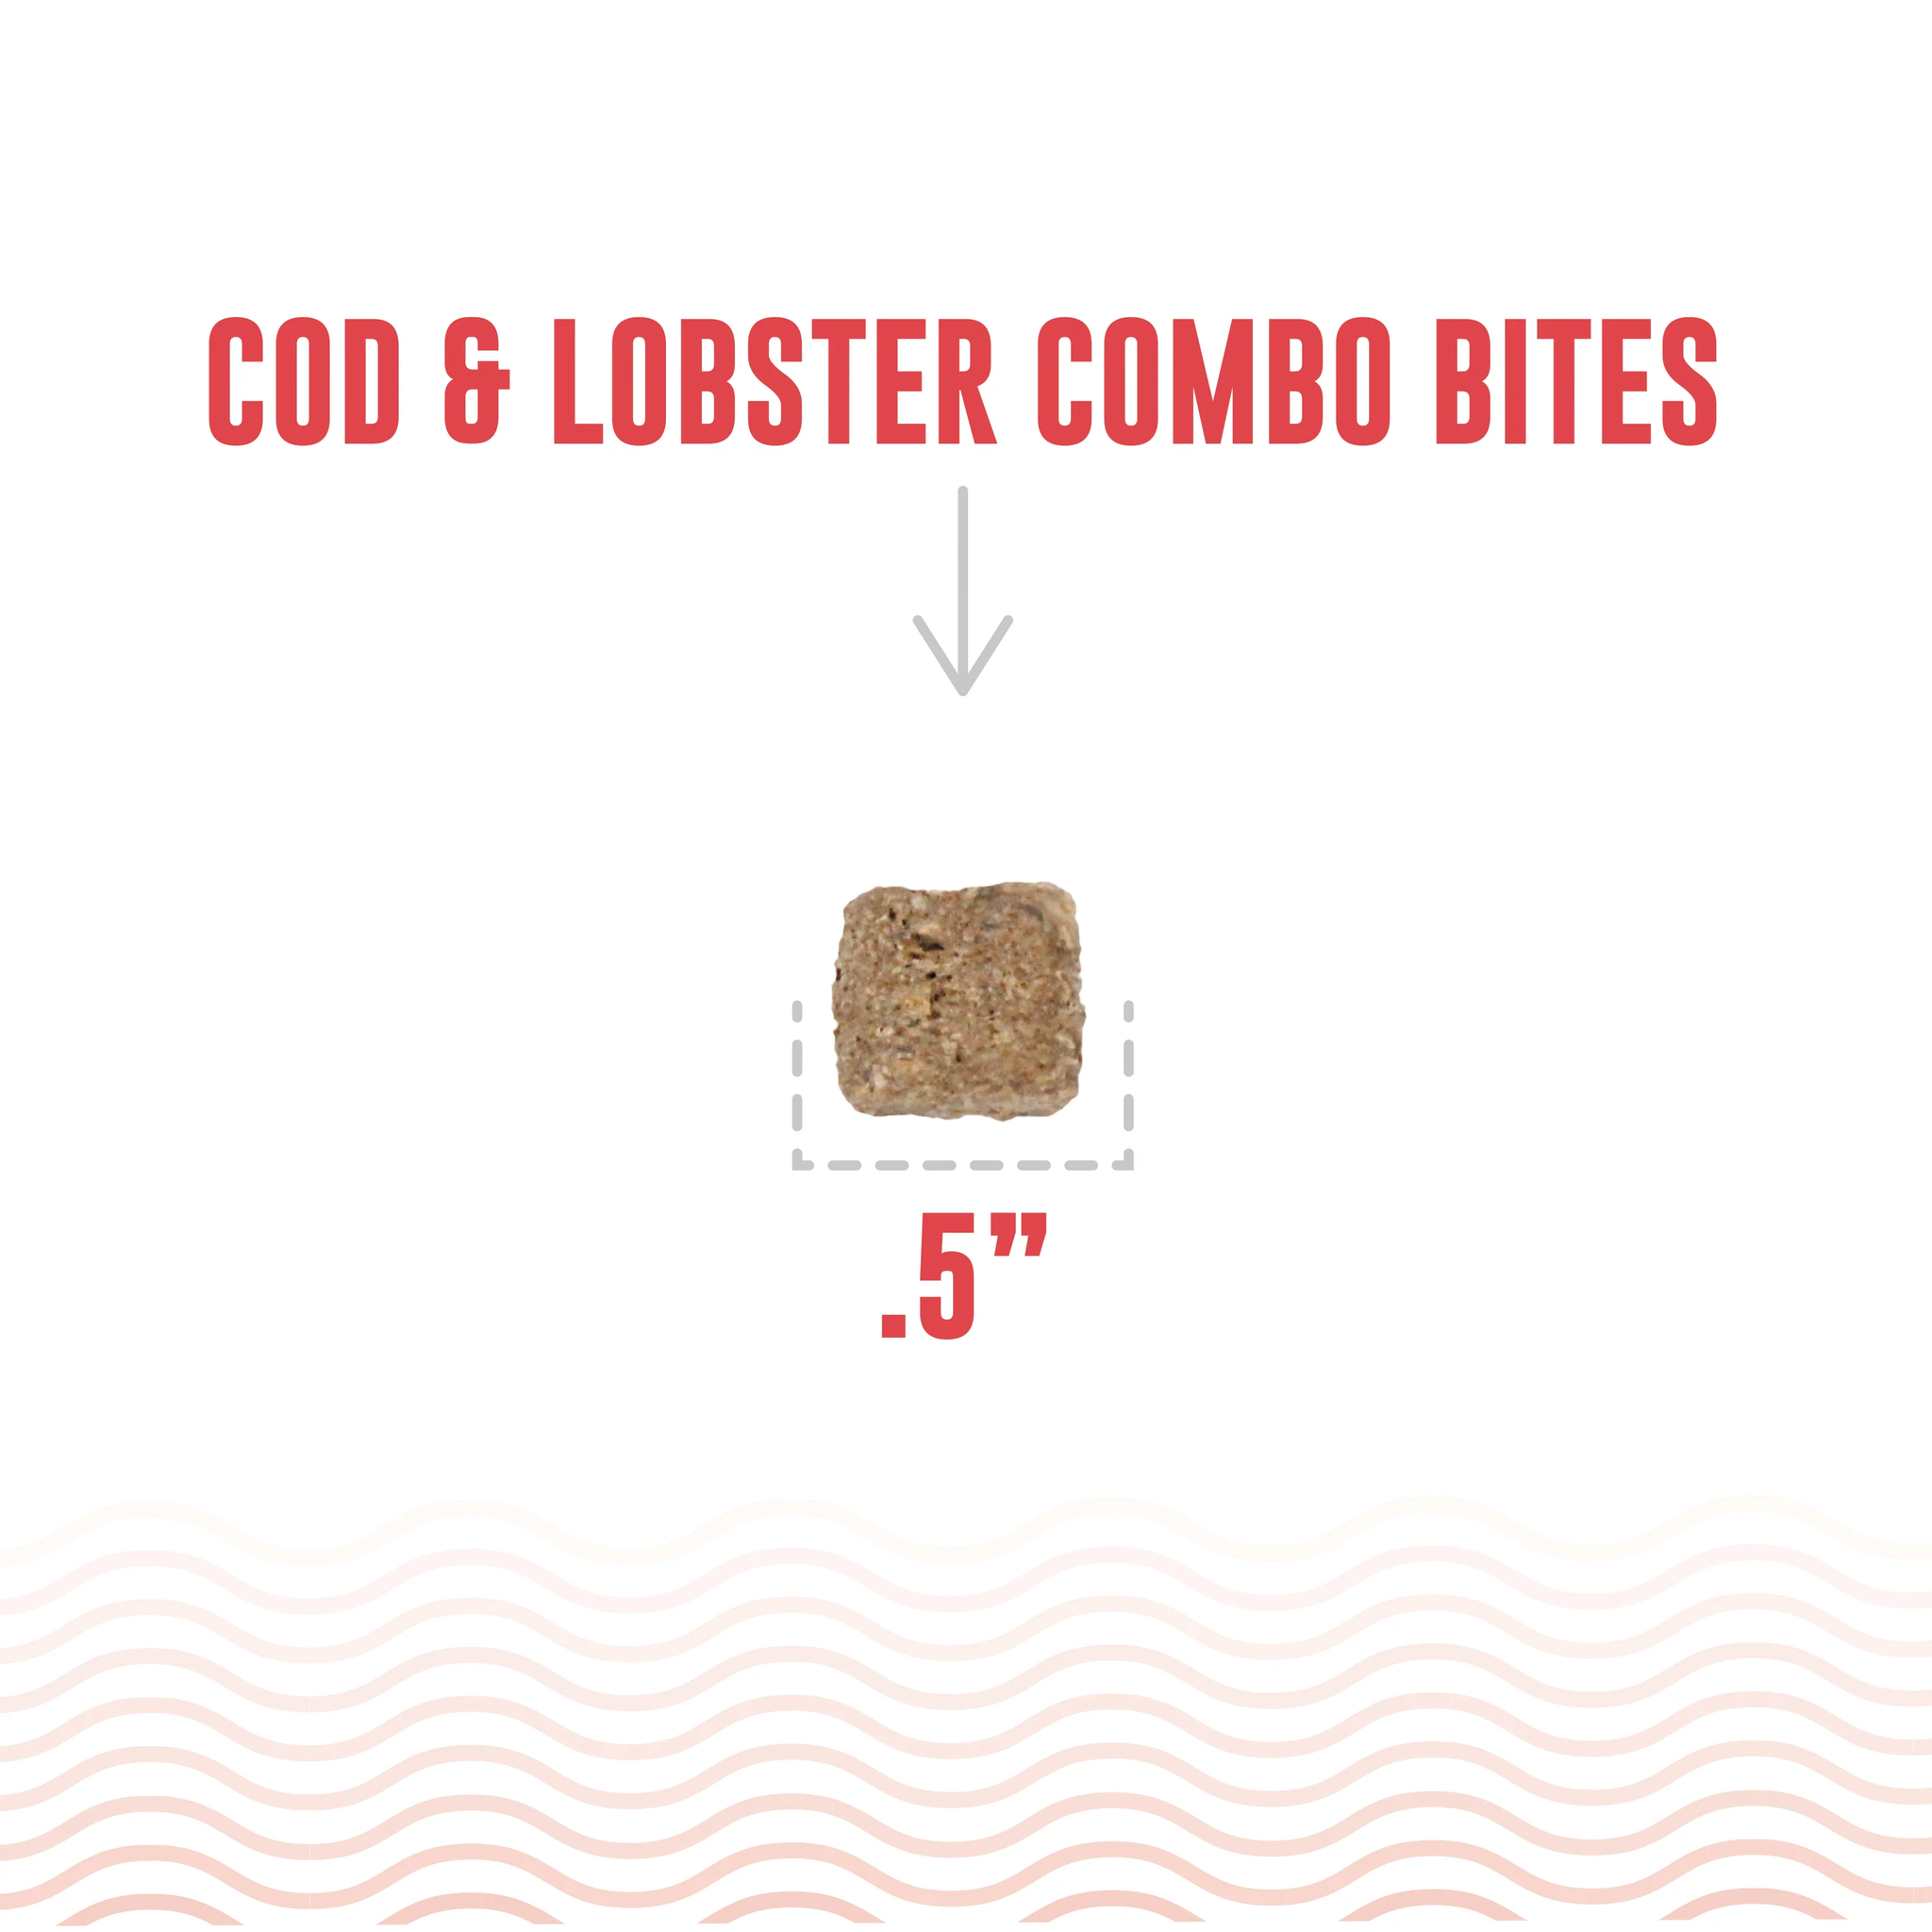 Icelandic Cod & Lobster Combo Bites 3oz